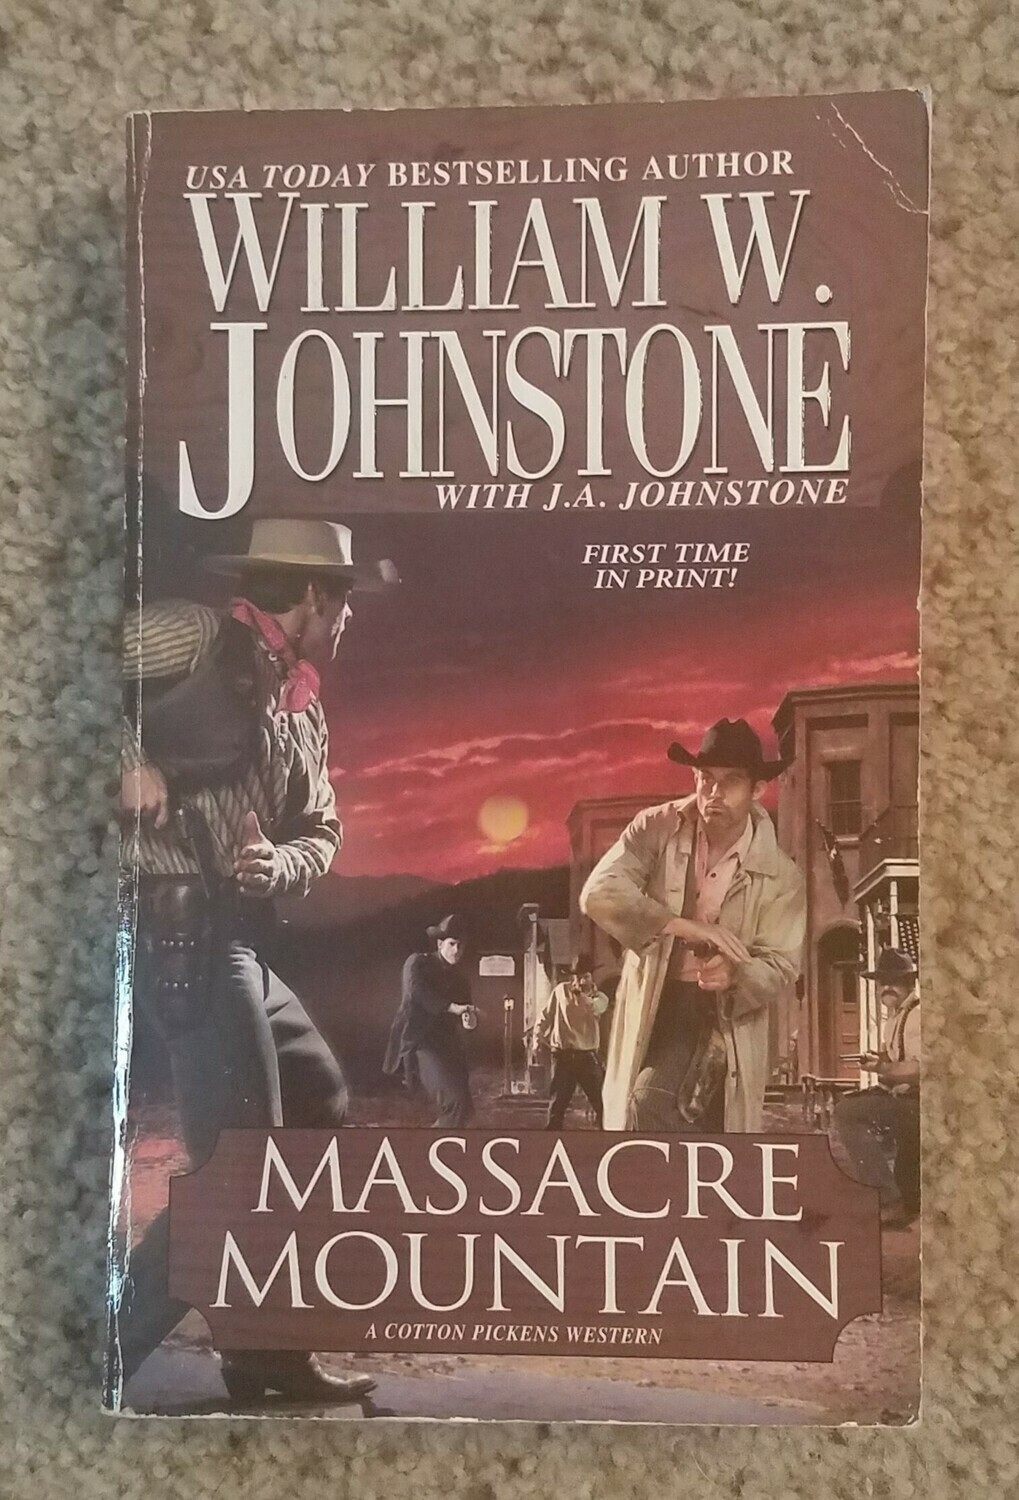 Massacre Mountain by William W. Johnstone with J.A. Johnstone